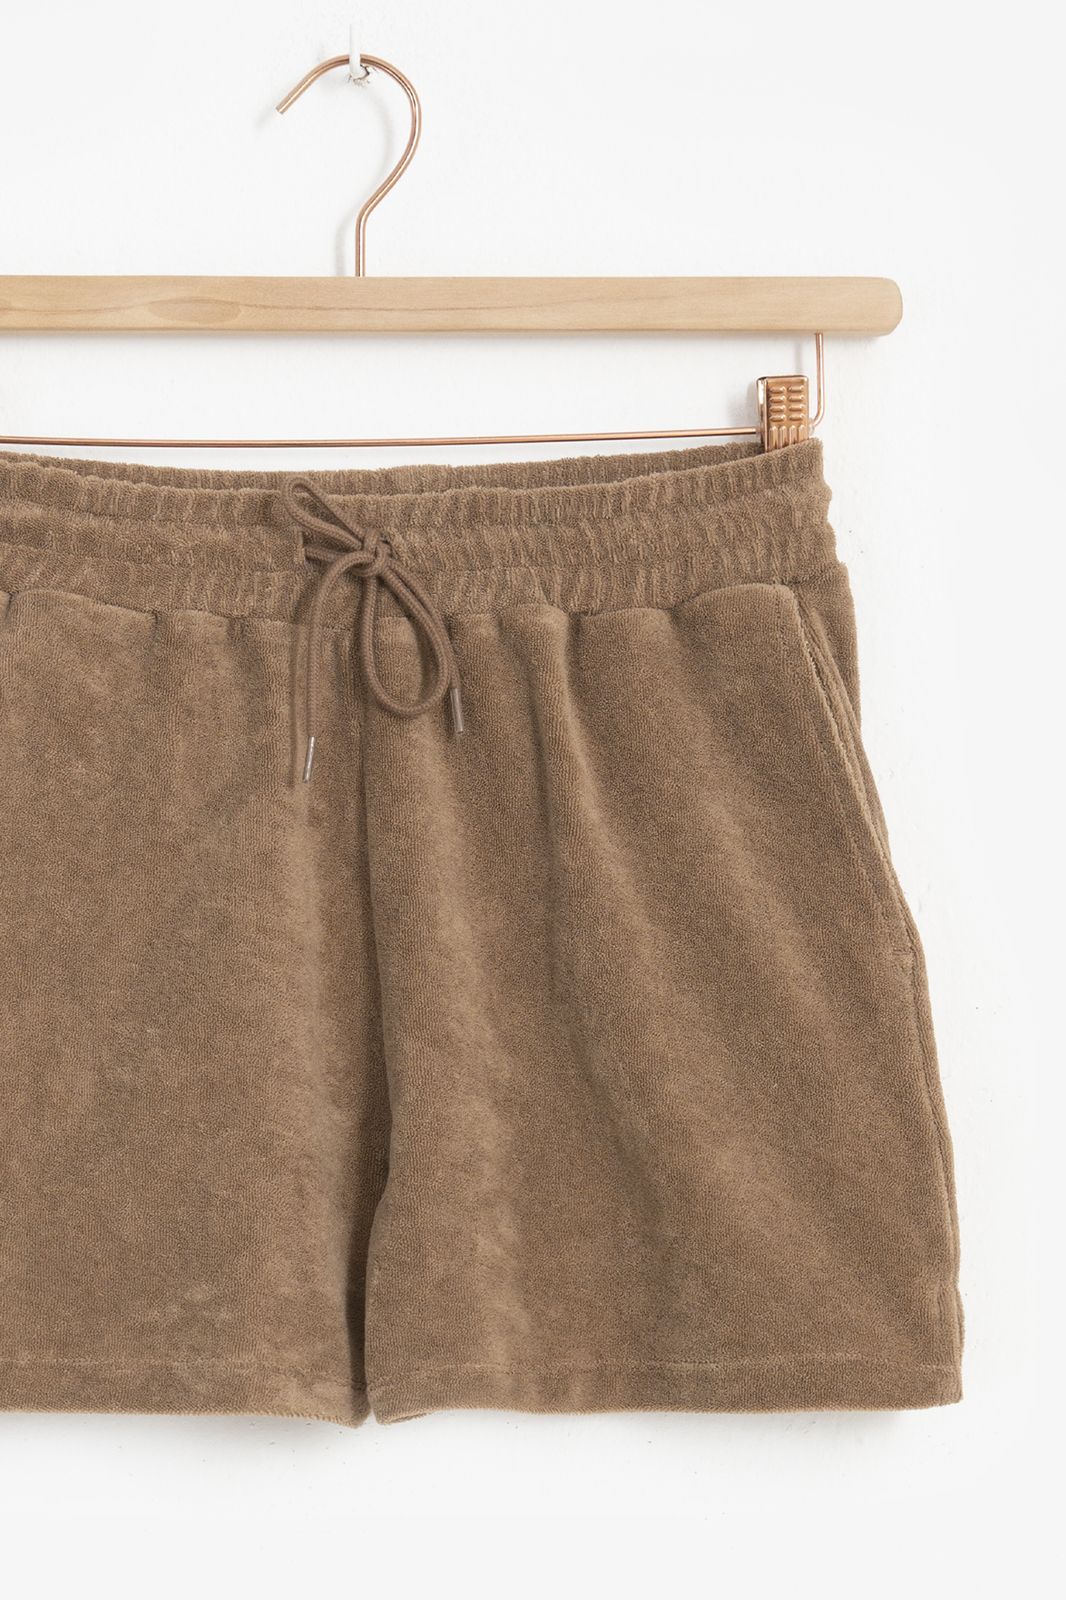 Bruine badstof shorts